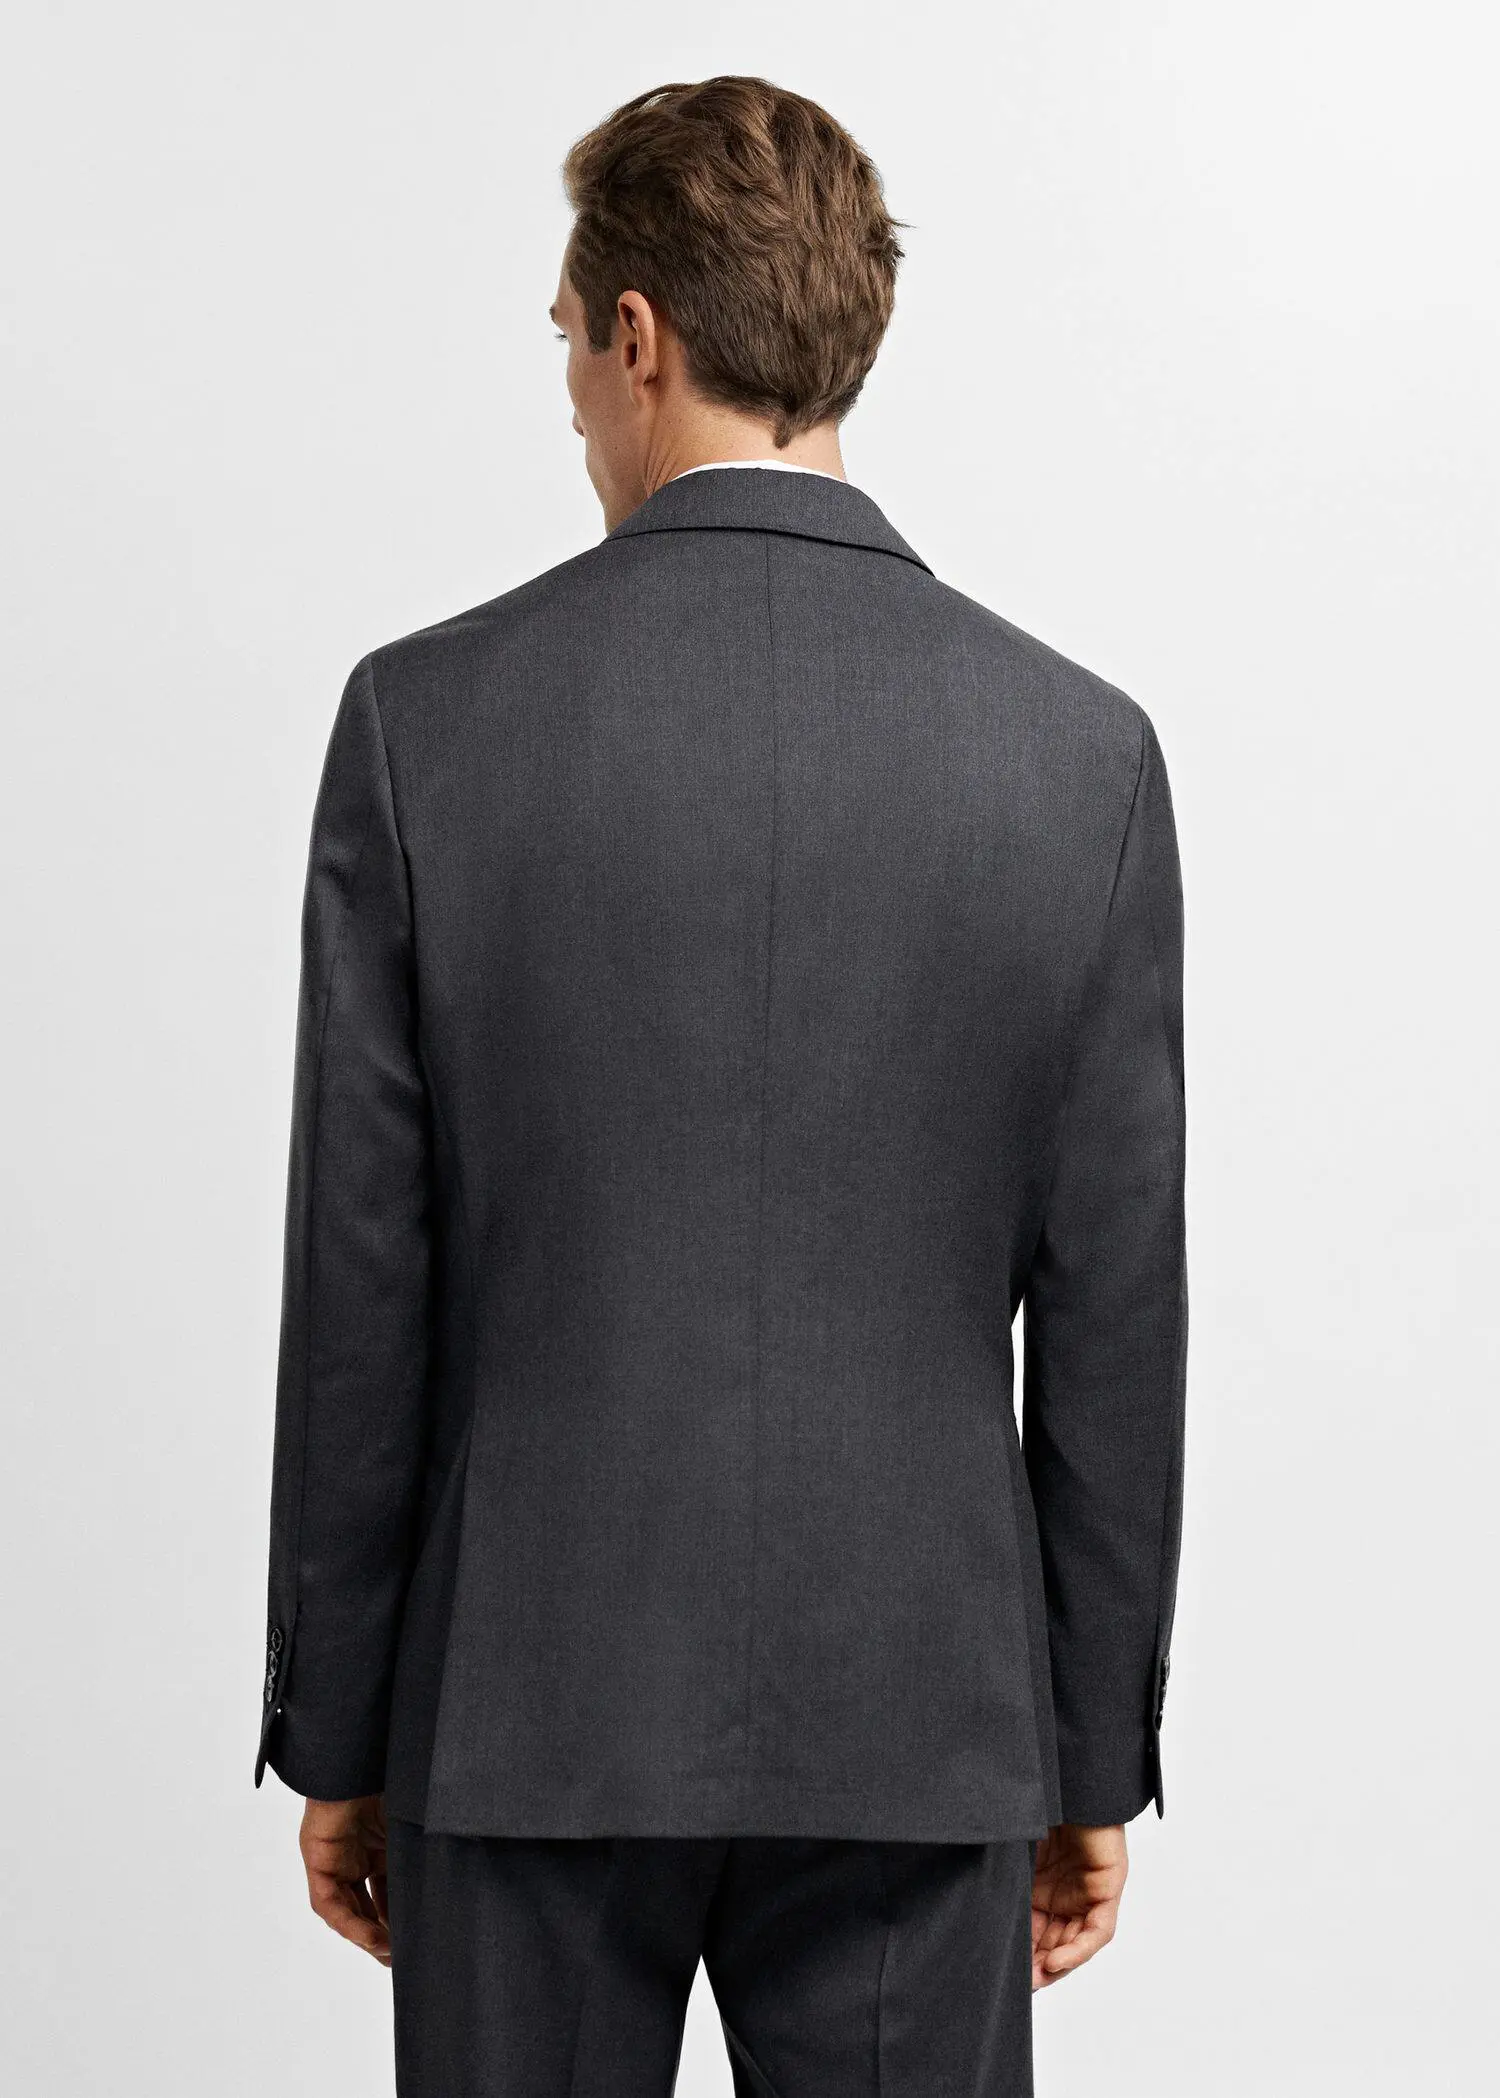 Mango 100% virgin wool suit blazer. 3